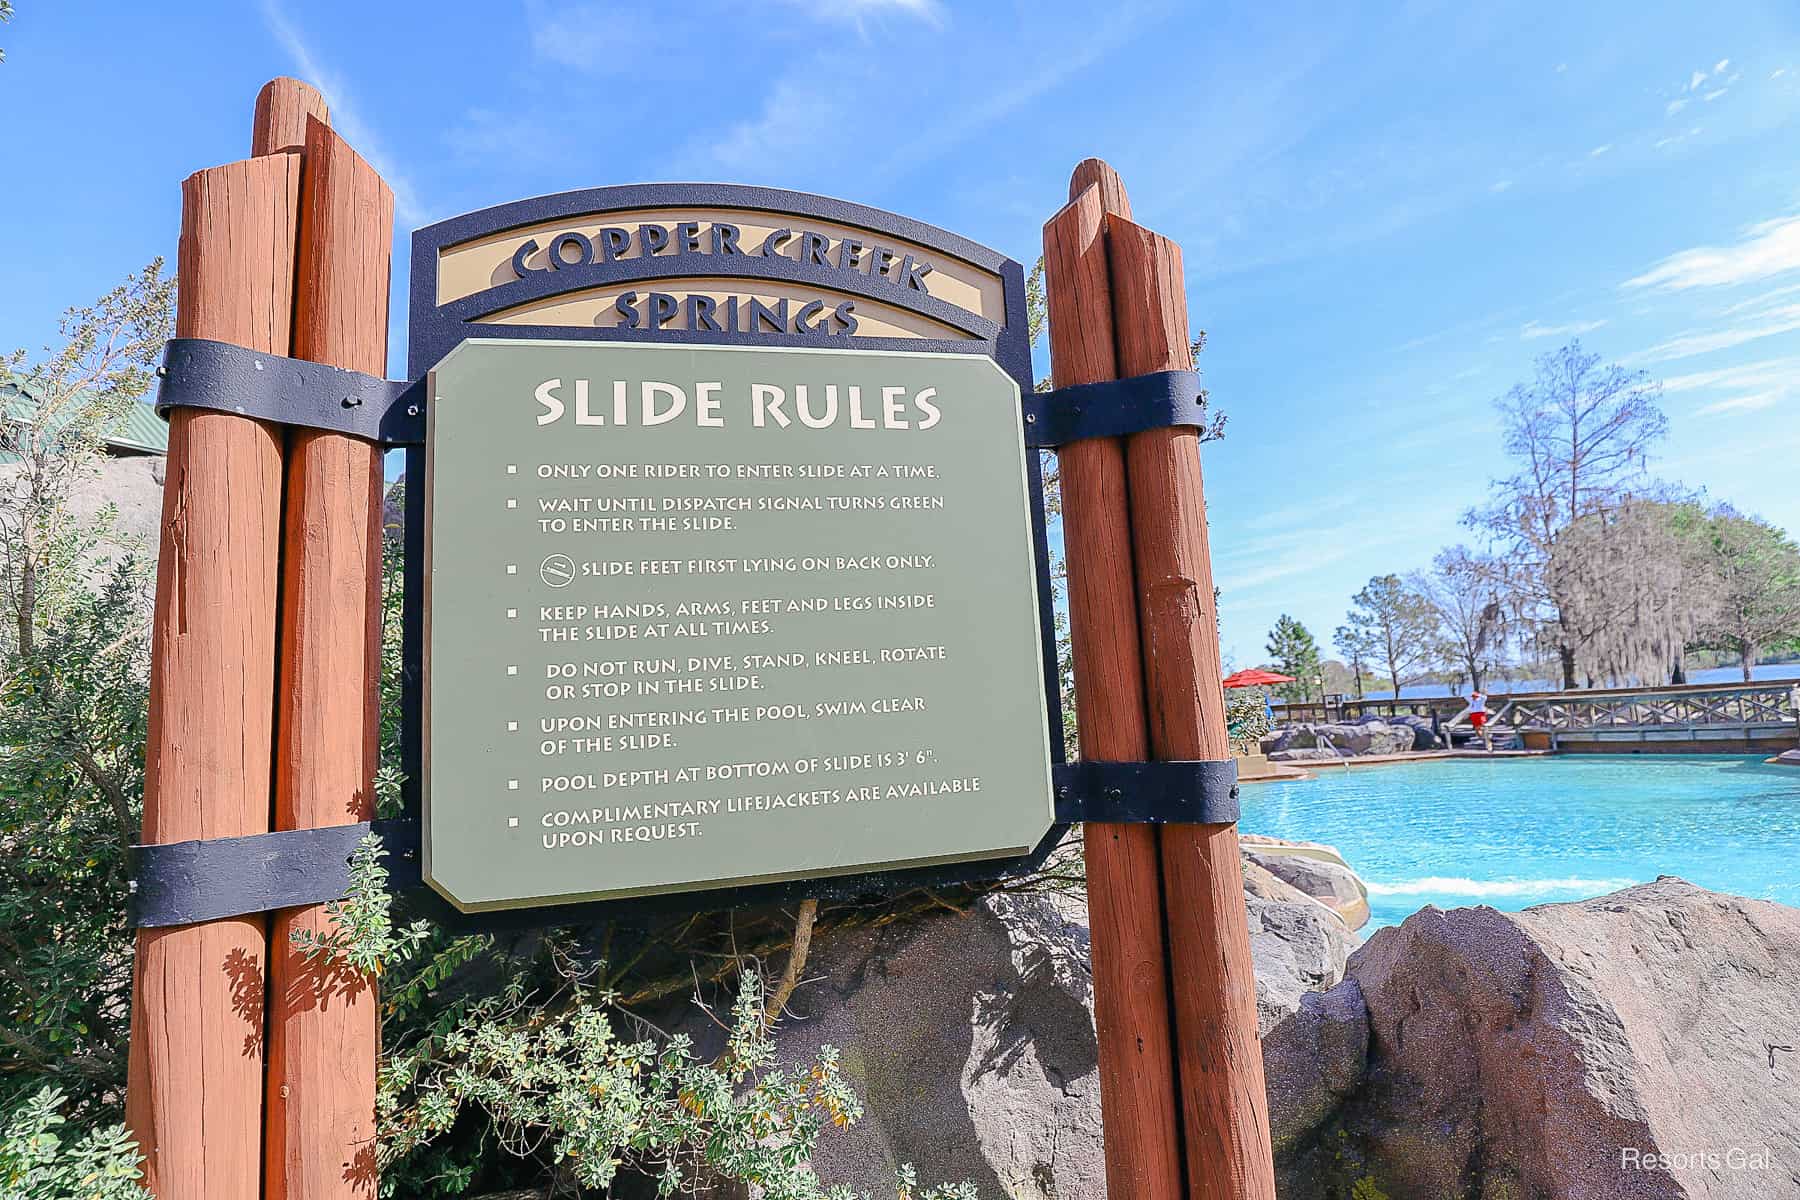 posted slide rules for the Copper Creek Springs slide 